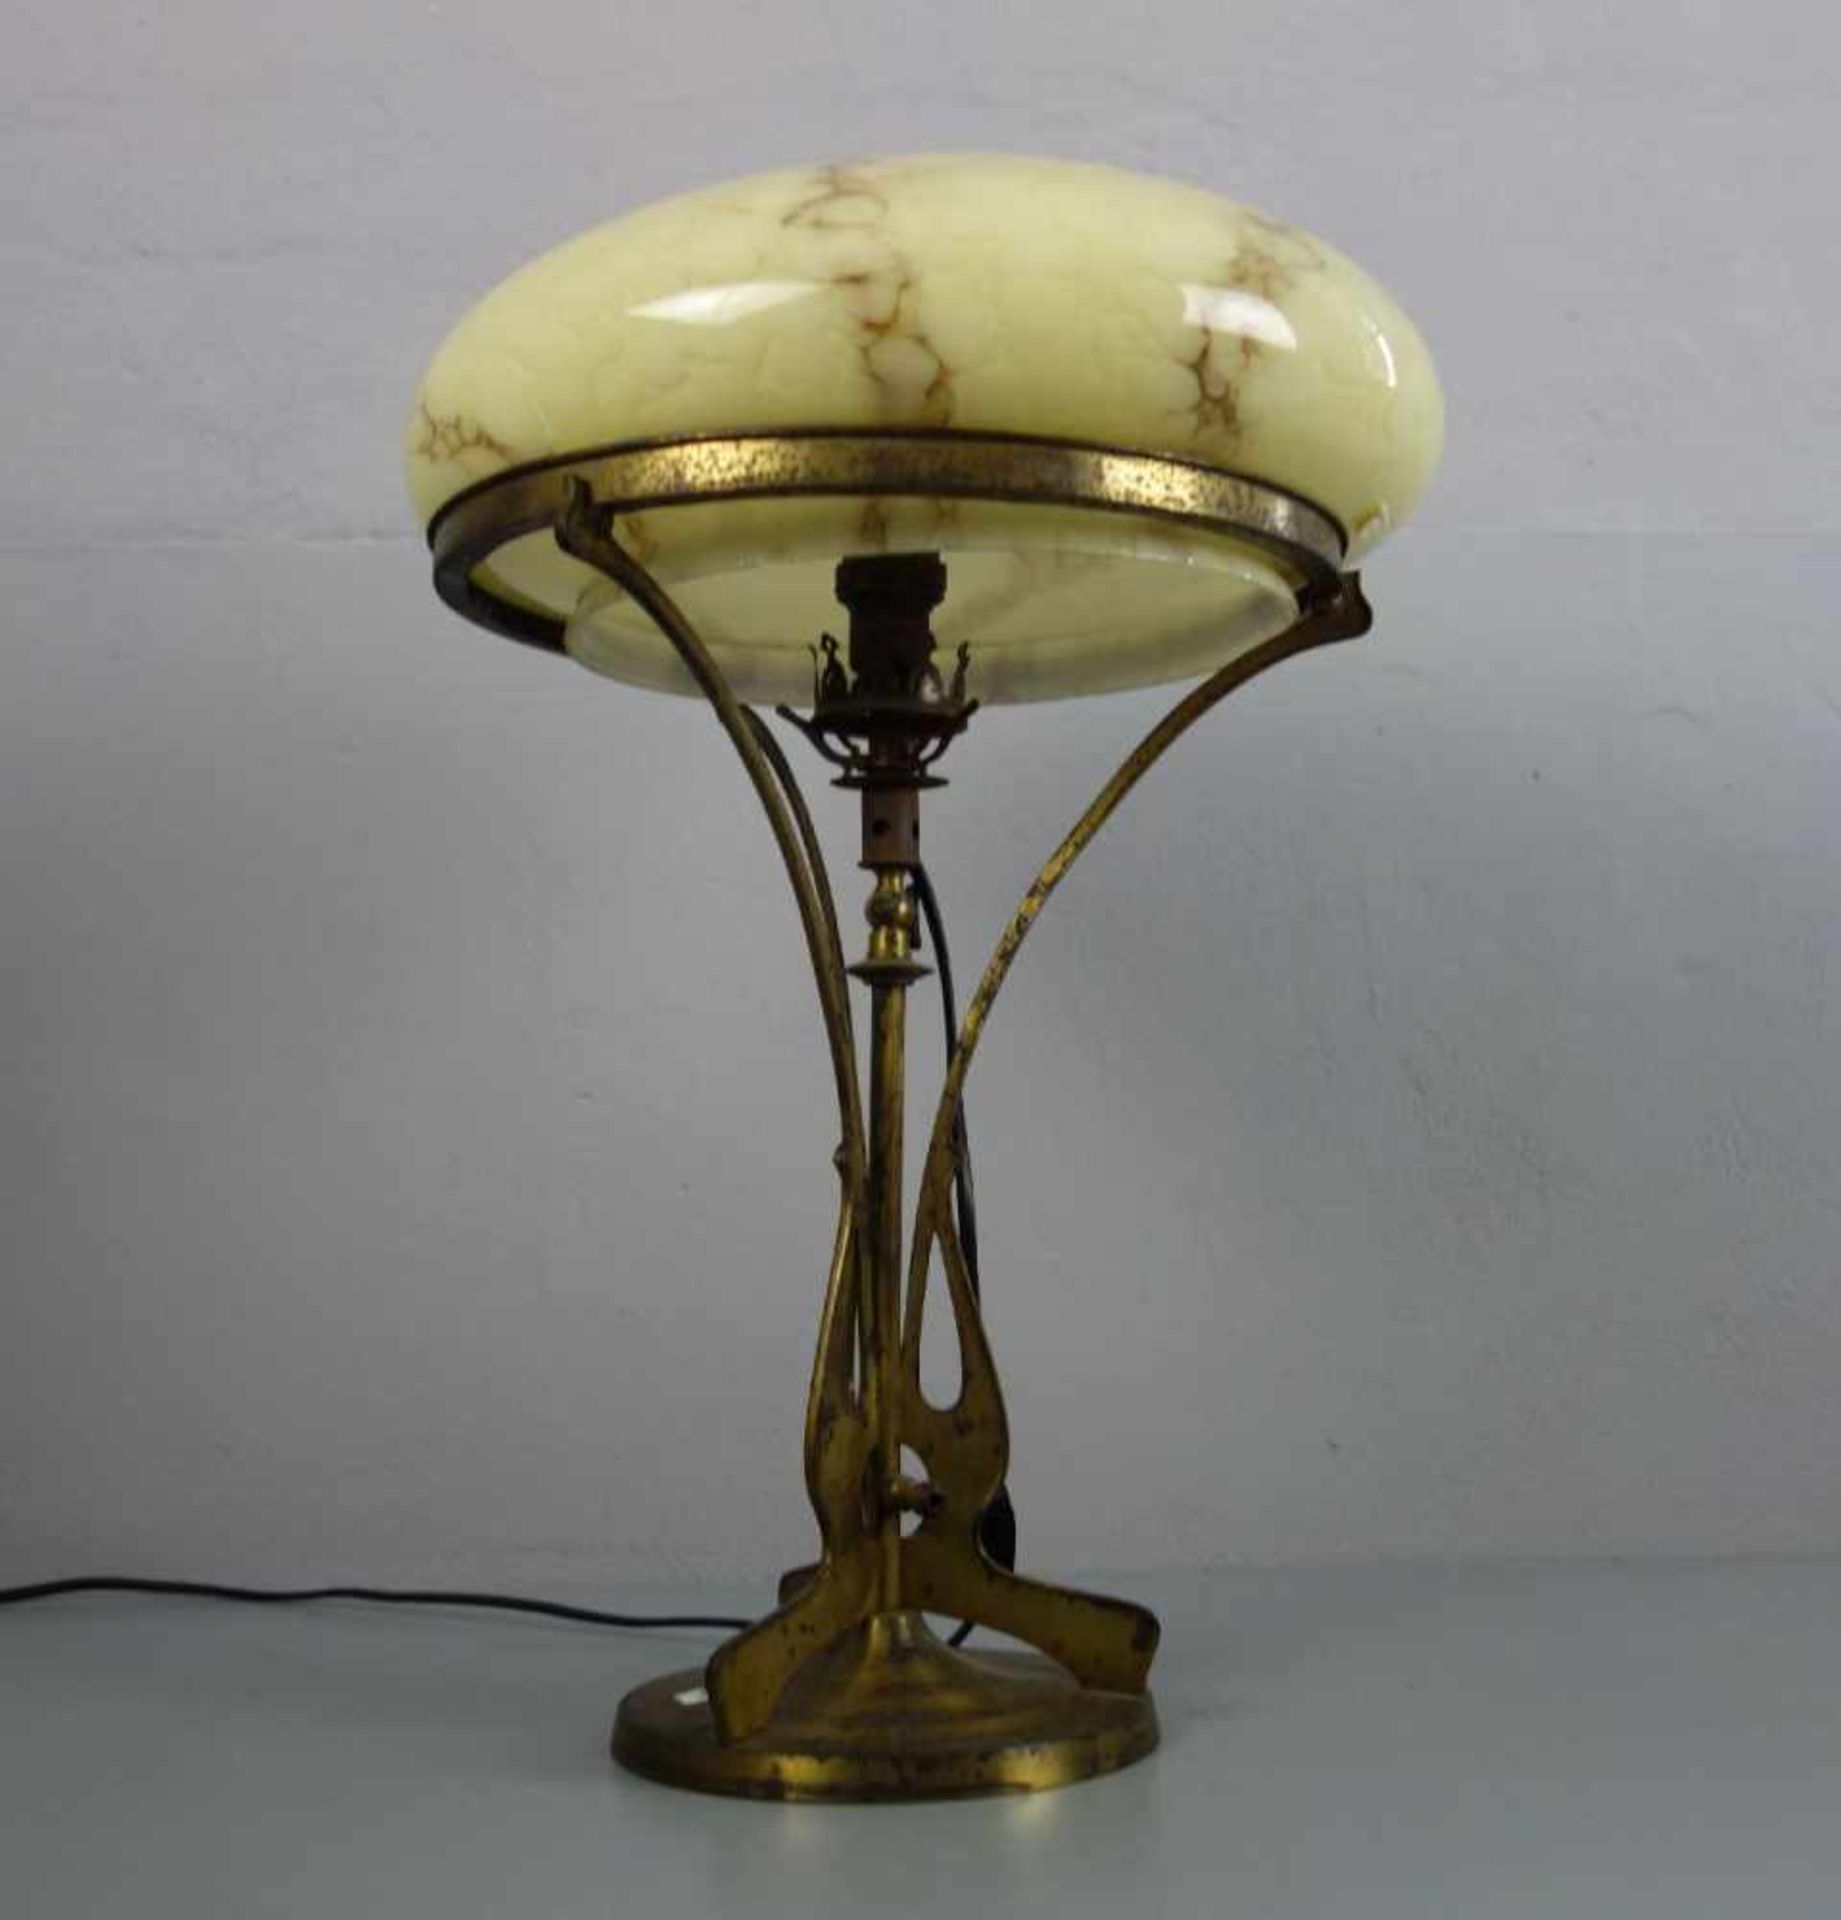 JUGENDSTIL - LAMPE / TISCHLAMPE / art nouveau lamp, um 1900. Messingfarbenes Metall, einflammig - Bild 4 aus 4